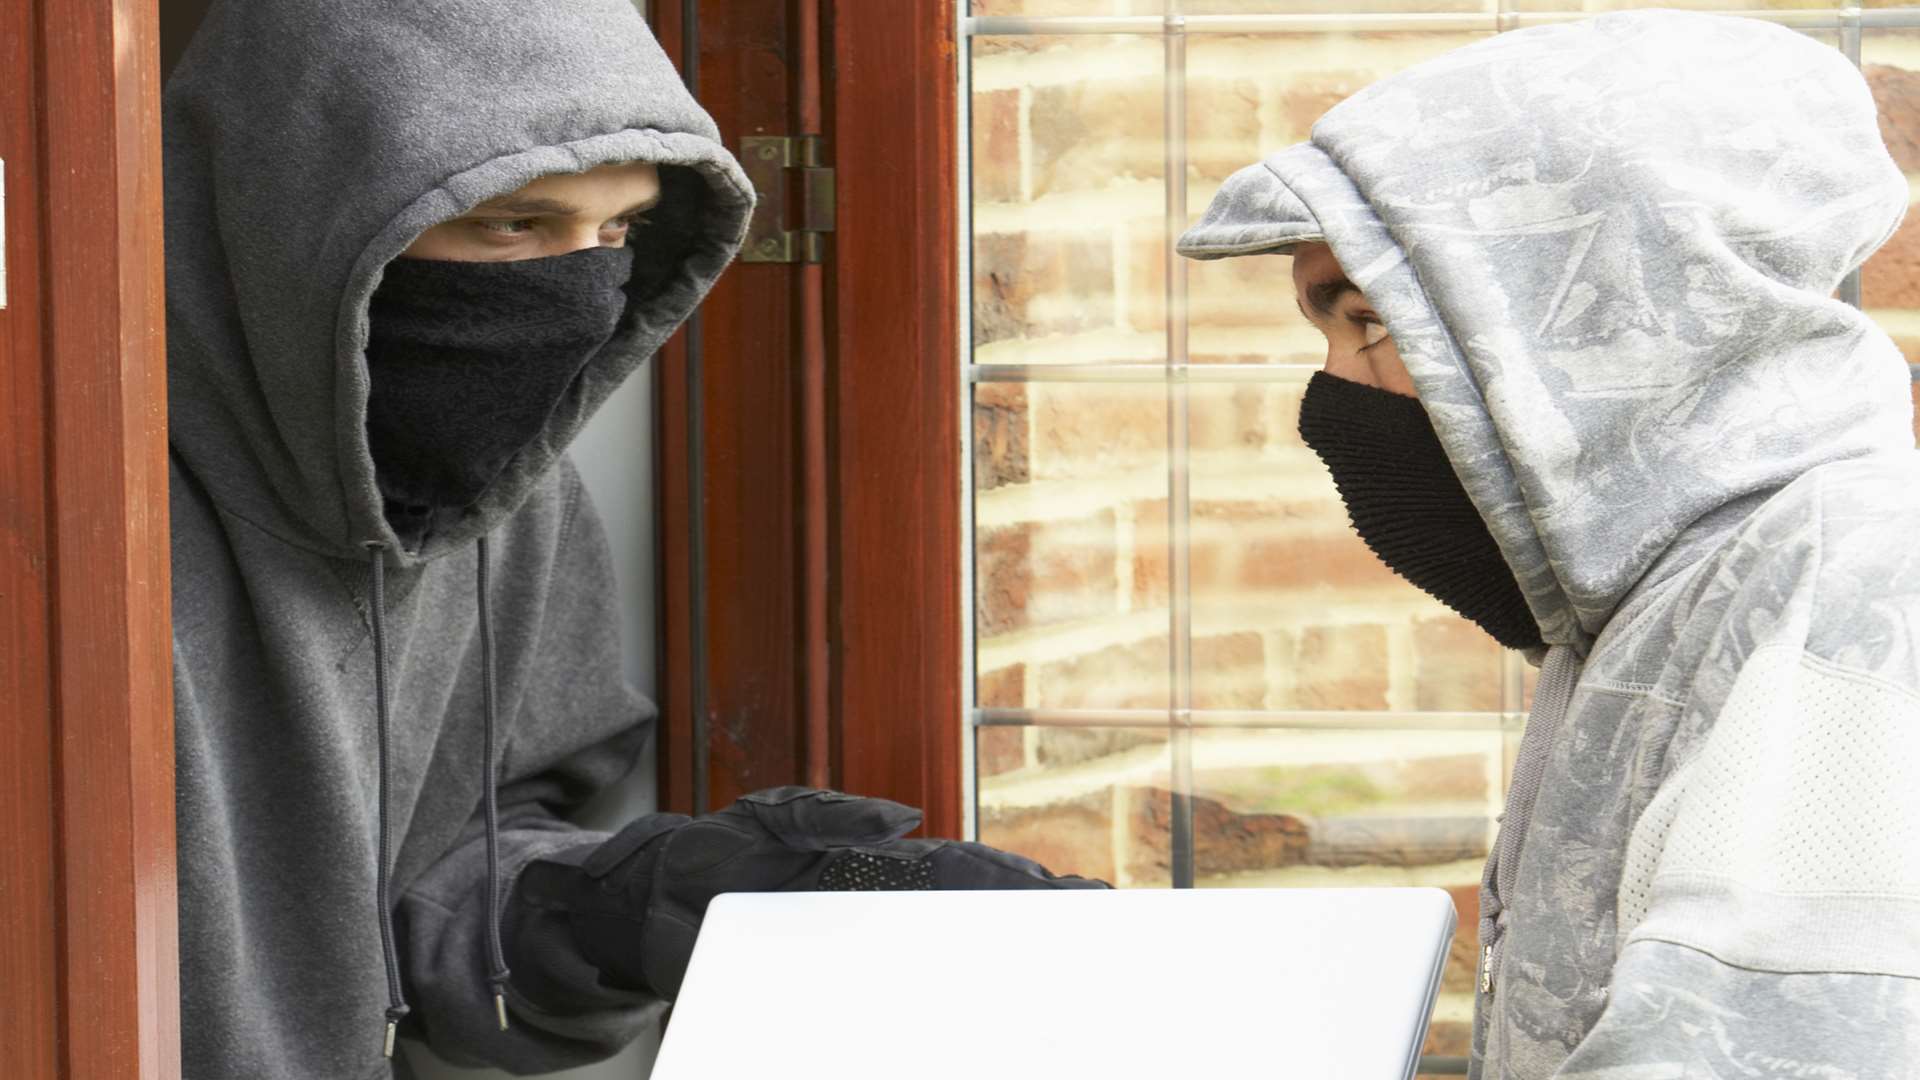 burglars stole cars, a laptop and jewellery.